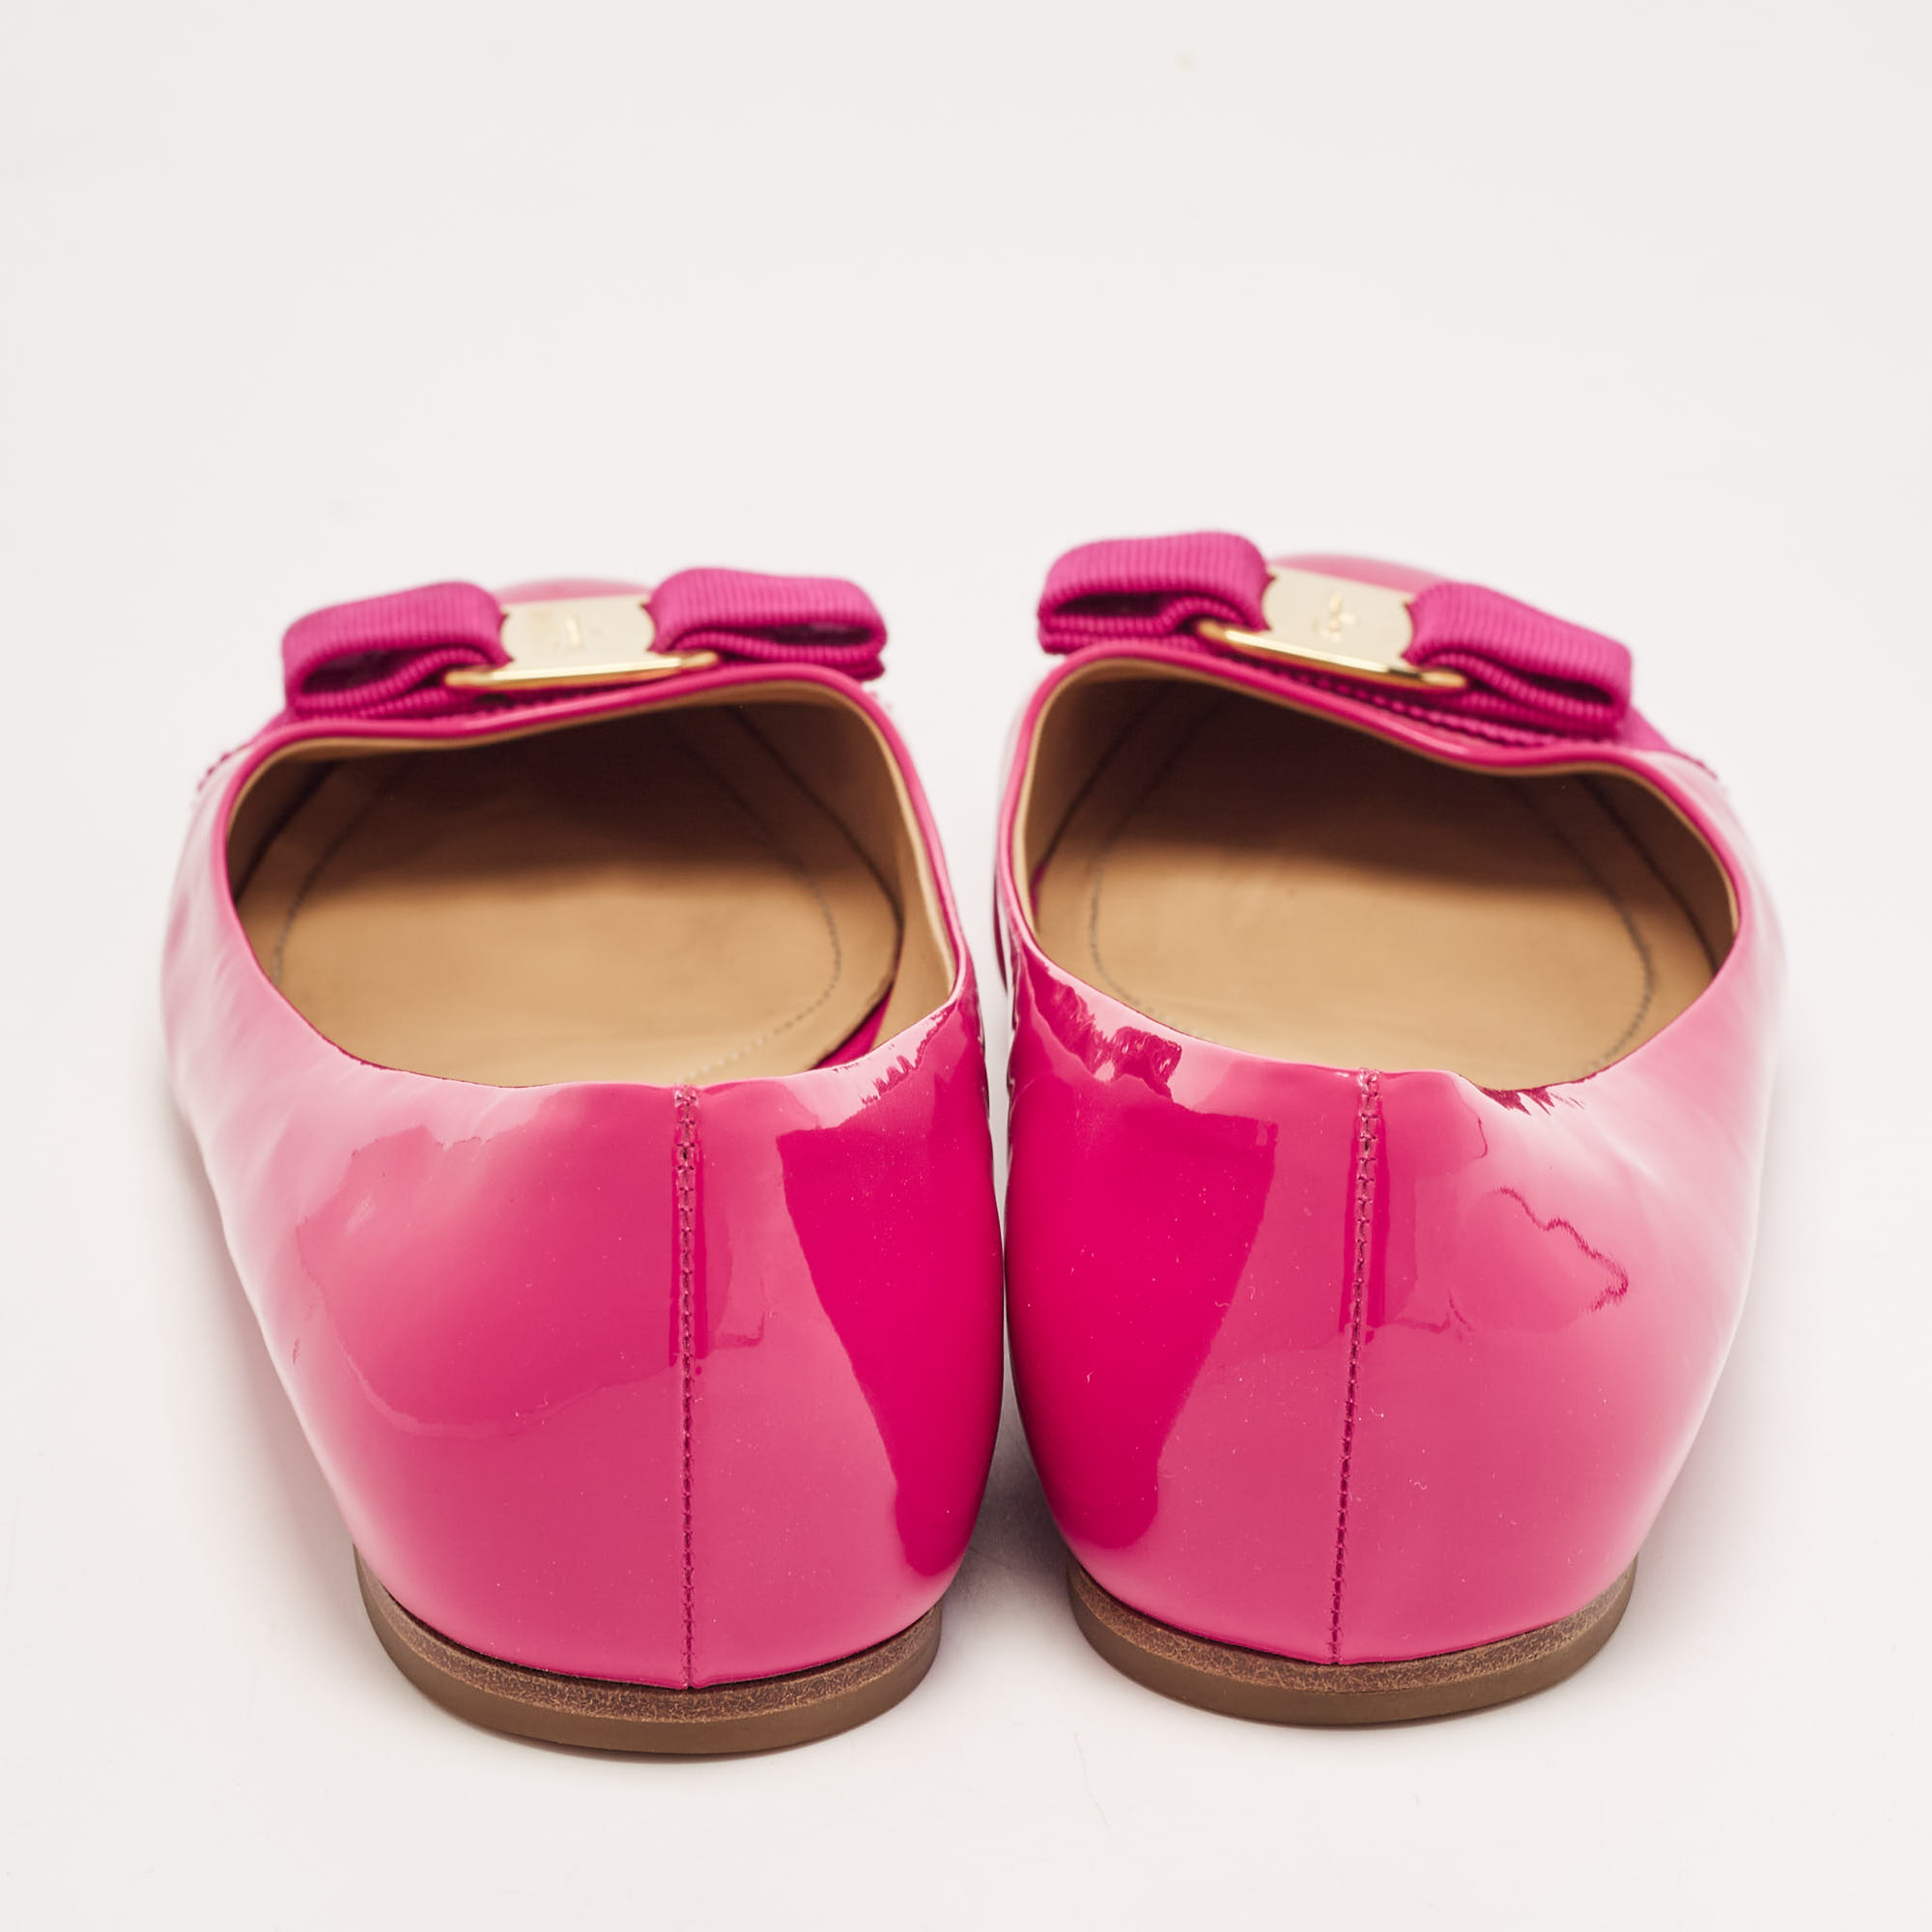 Salvatore Ferragamo Pink Patent Leather Vara Bow Ballet Flats Size 38.5